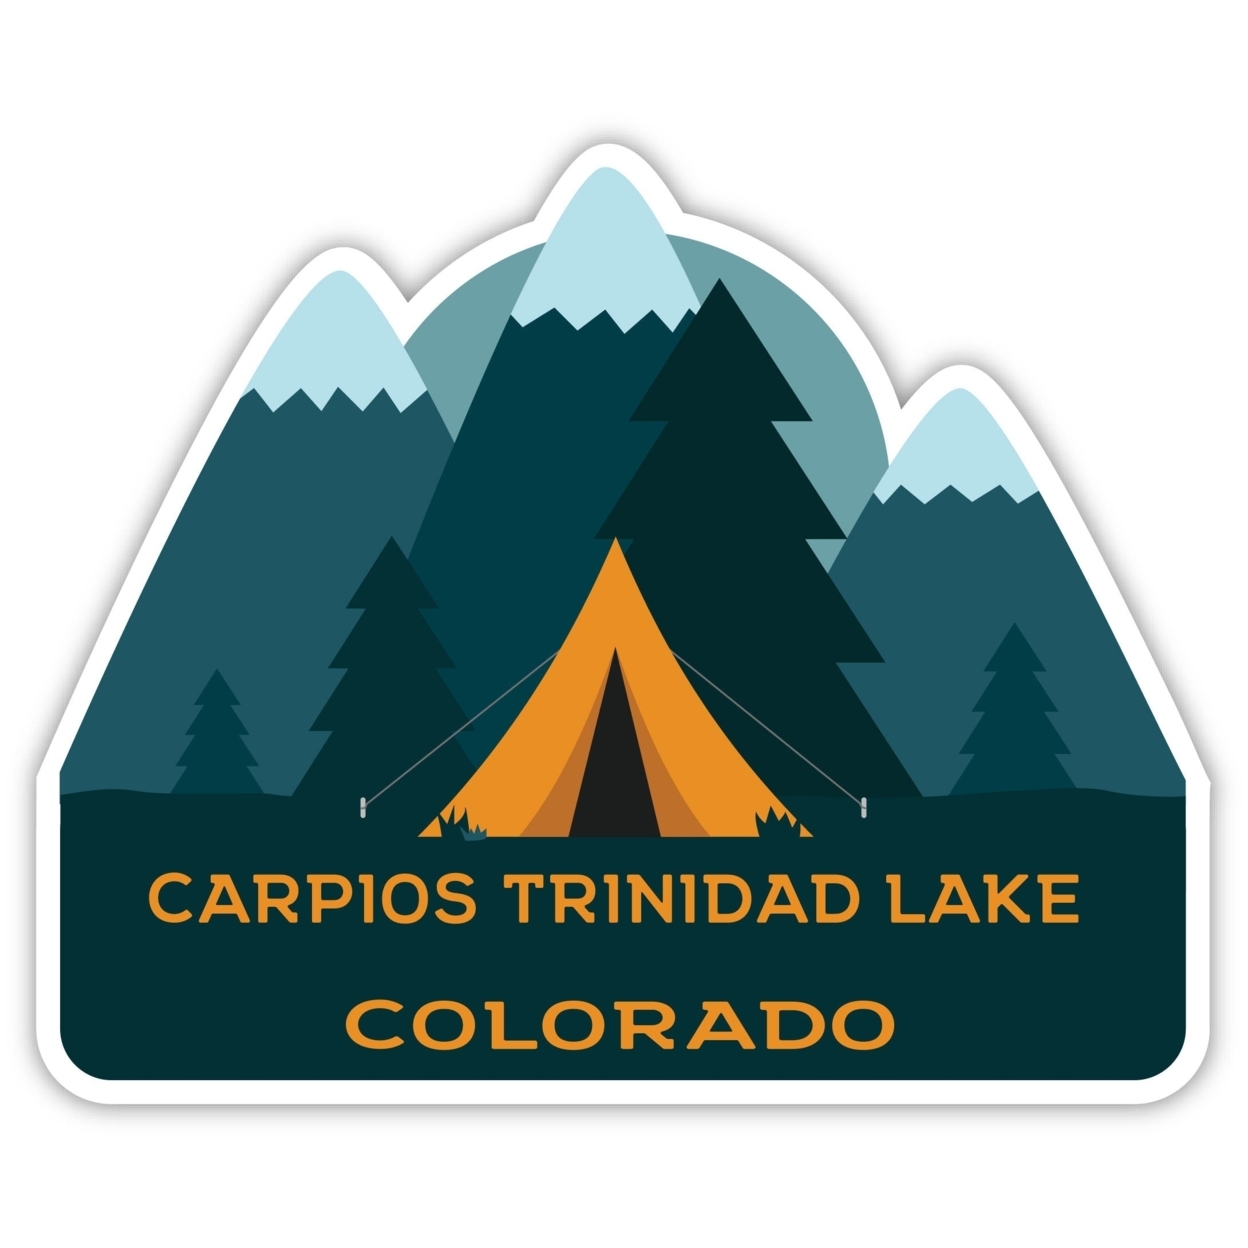 Carpios Trinidad Lake Colorado Souvenir Decorative Stickers (Choose Theme And Size) - 4-Pack, 2-Inch, Tent